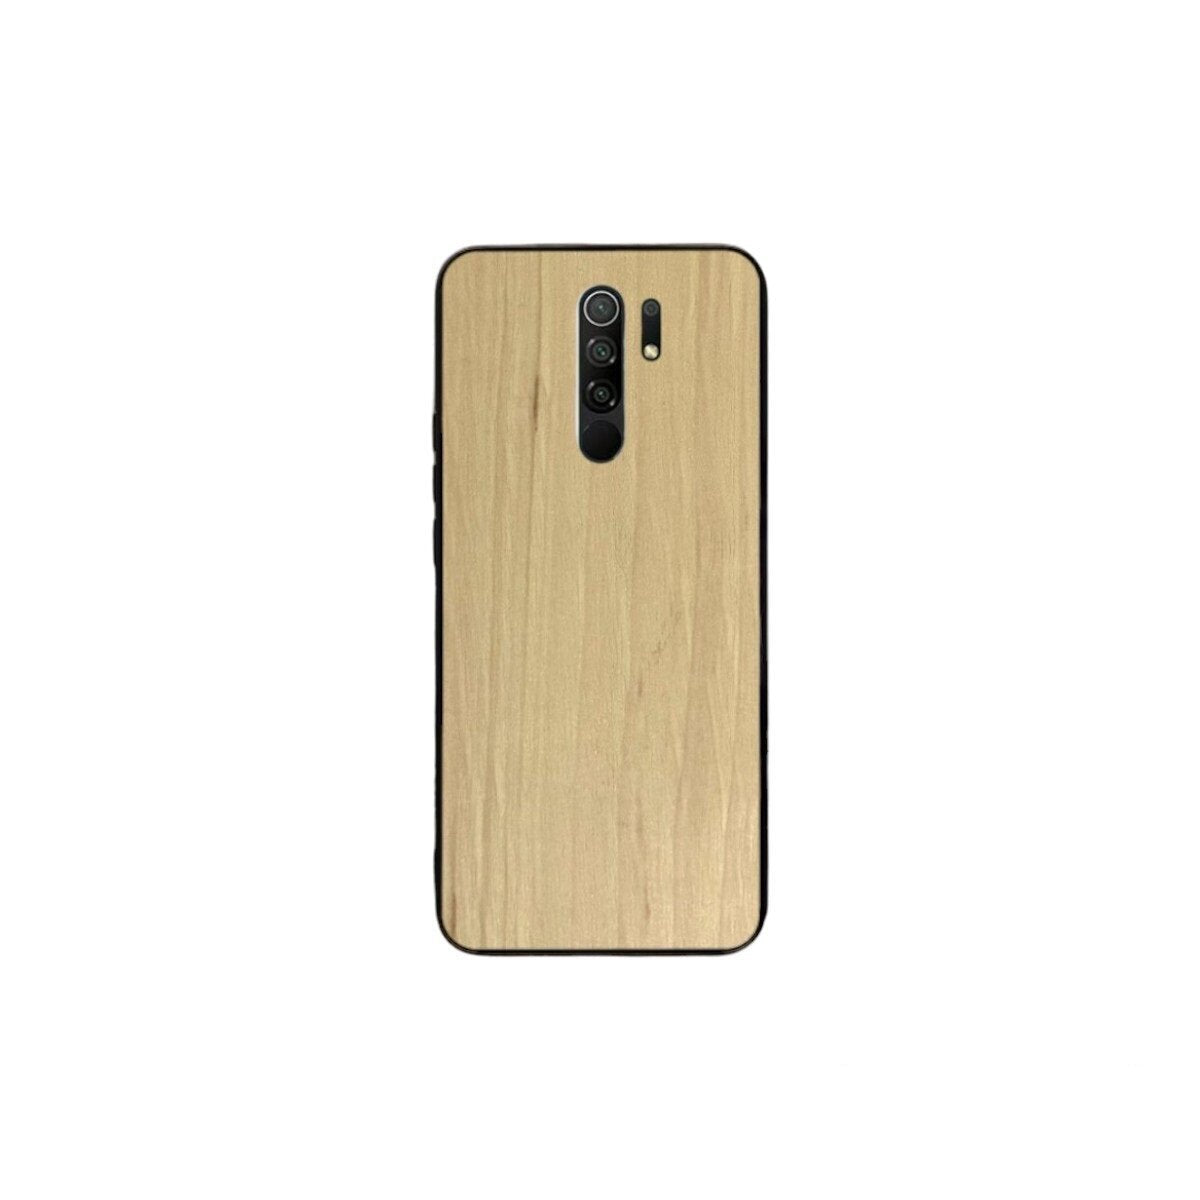 Xiaomi Redmi case - The simple one